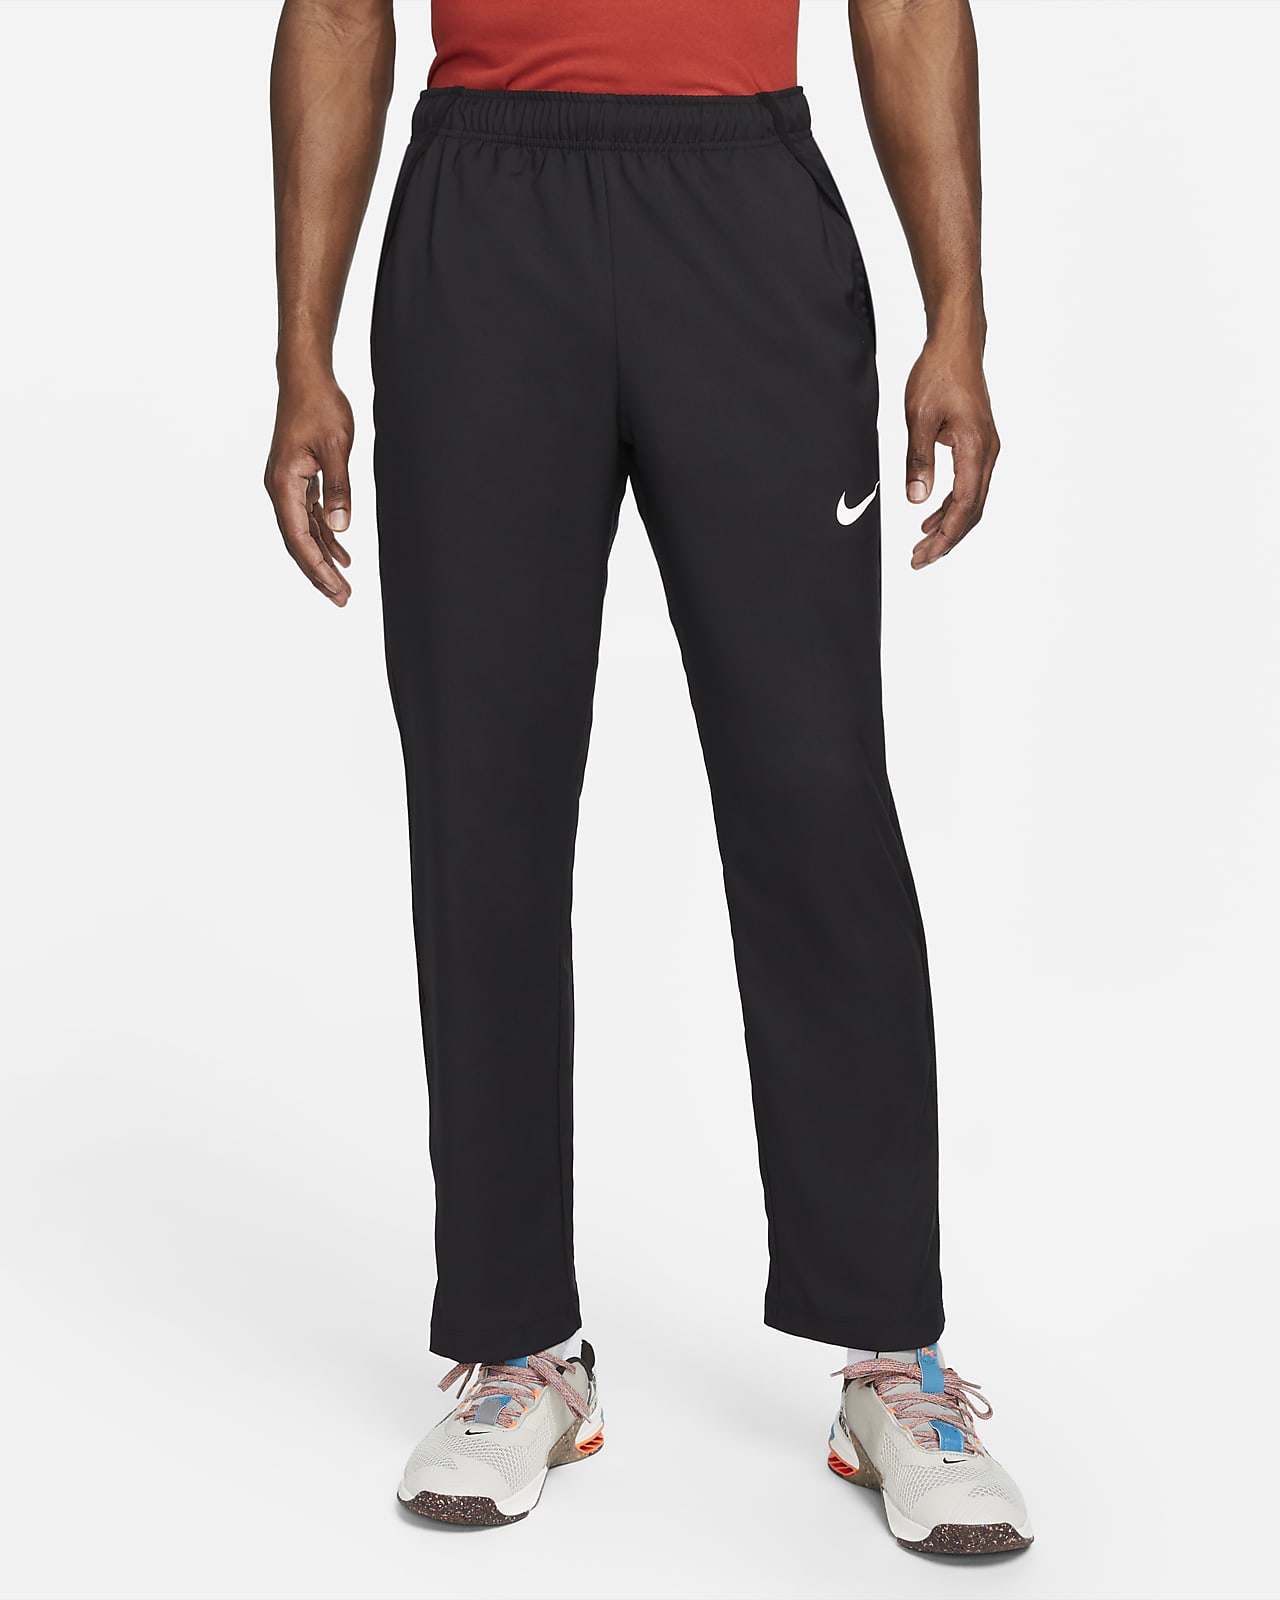 Nike Dri-FIT Men's Woven Team Training Trousers